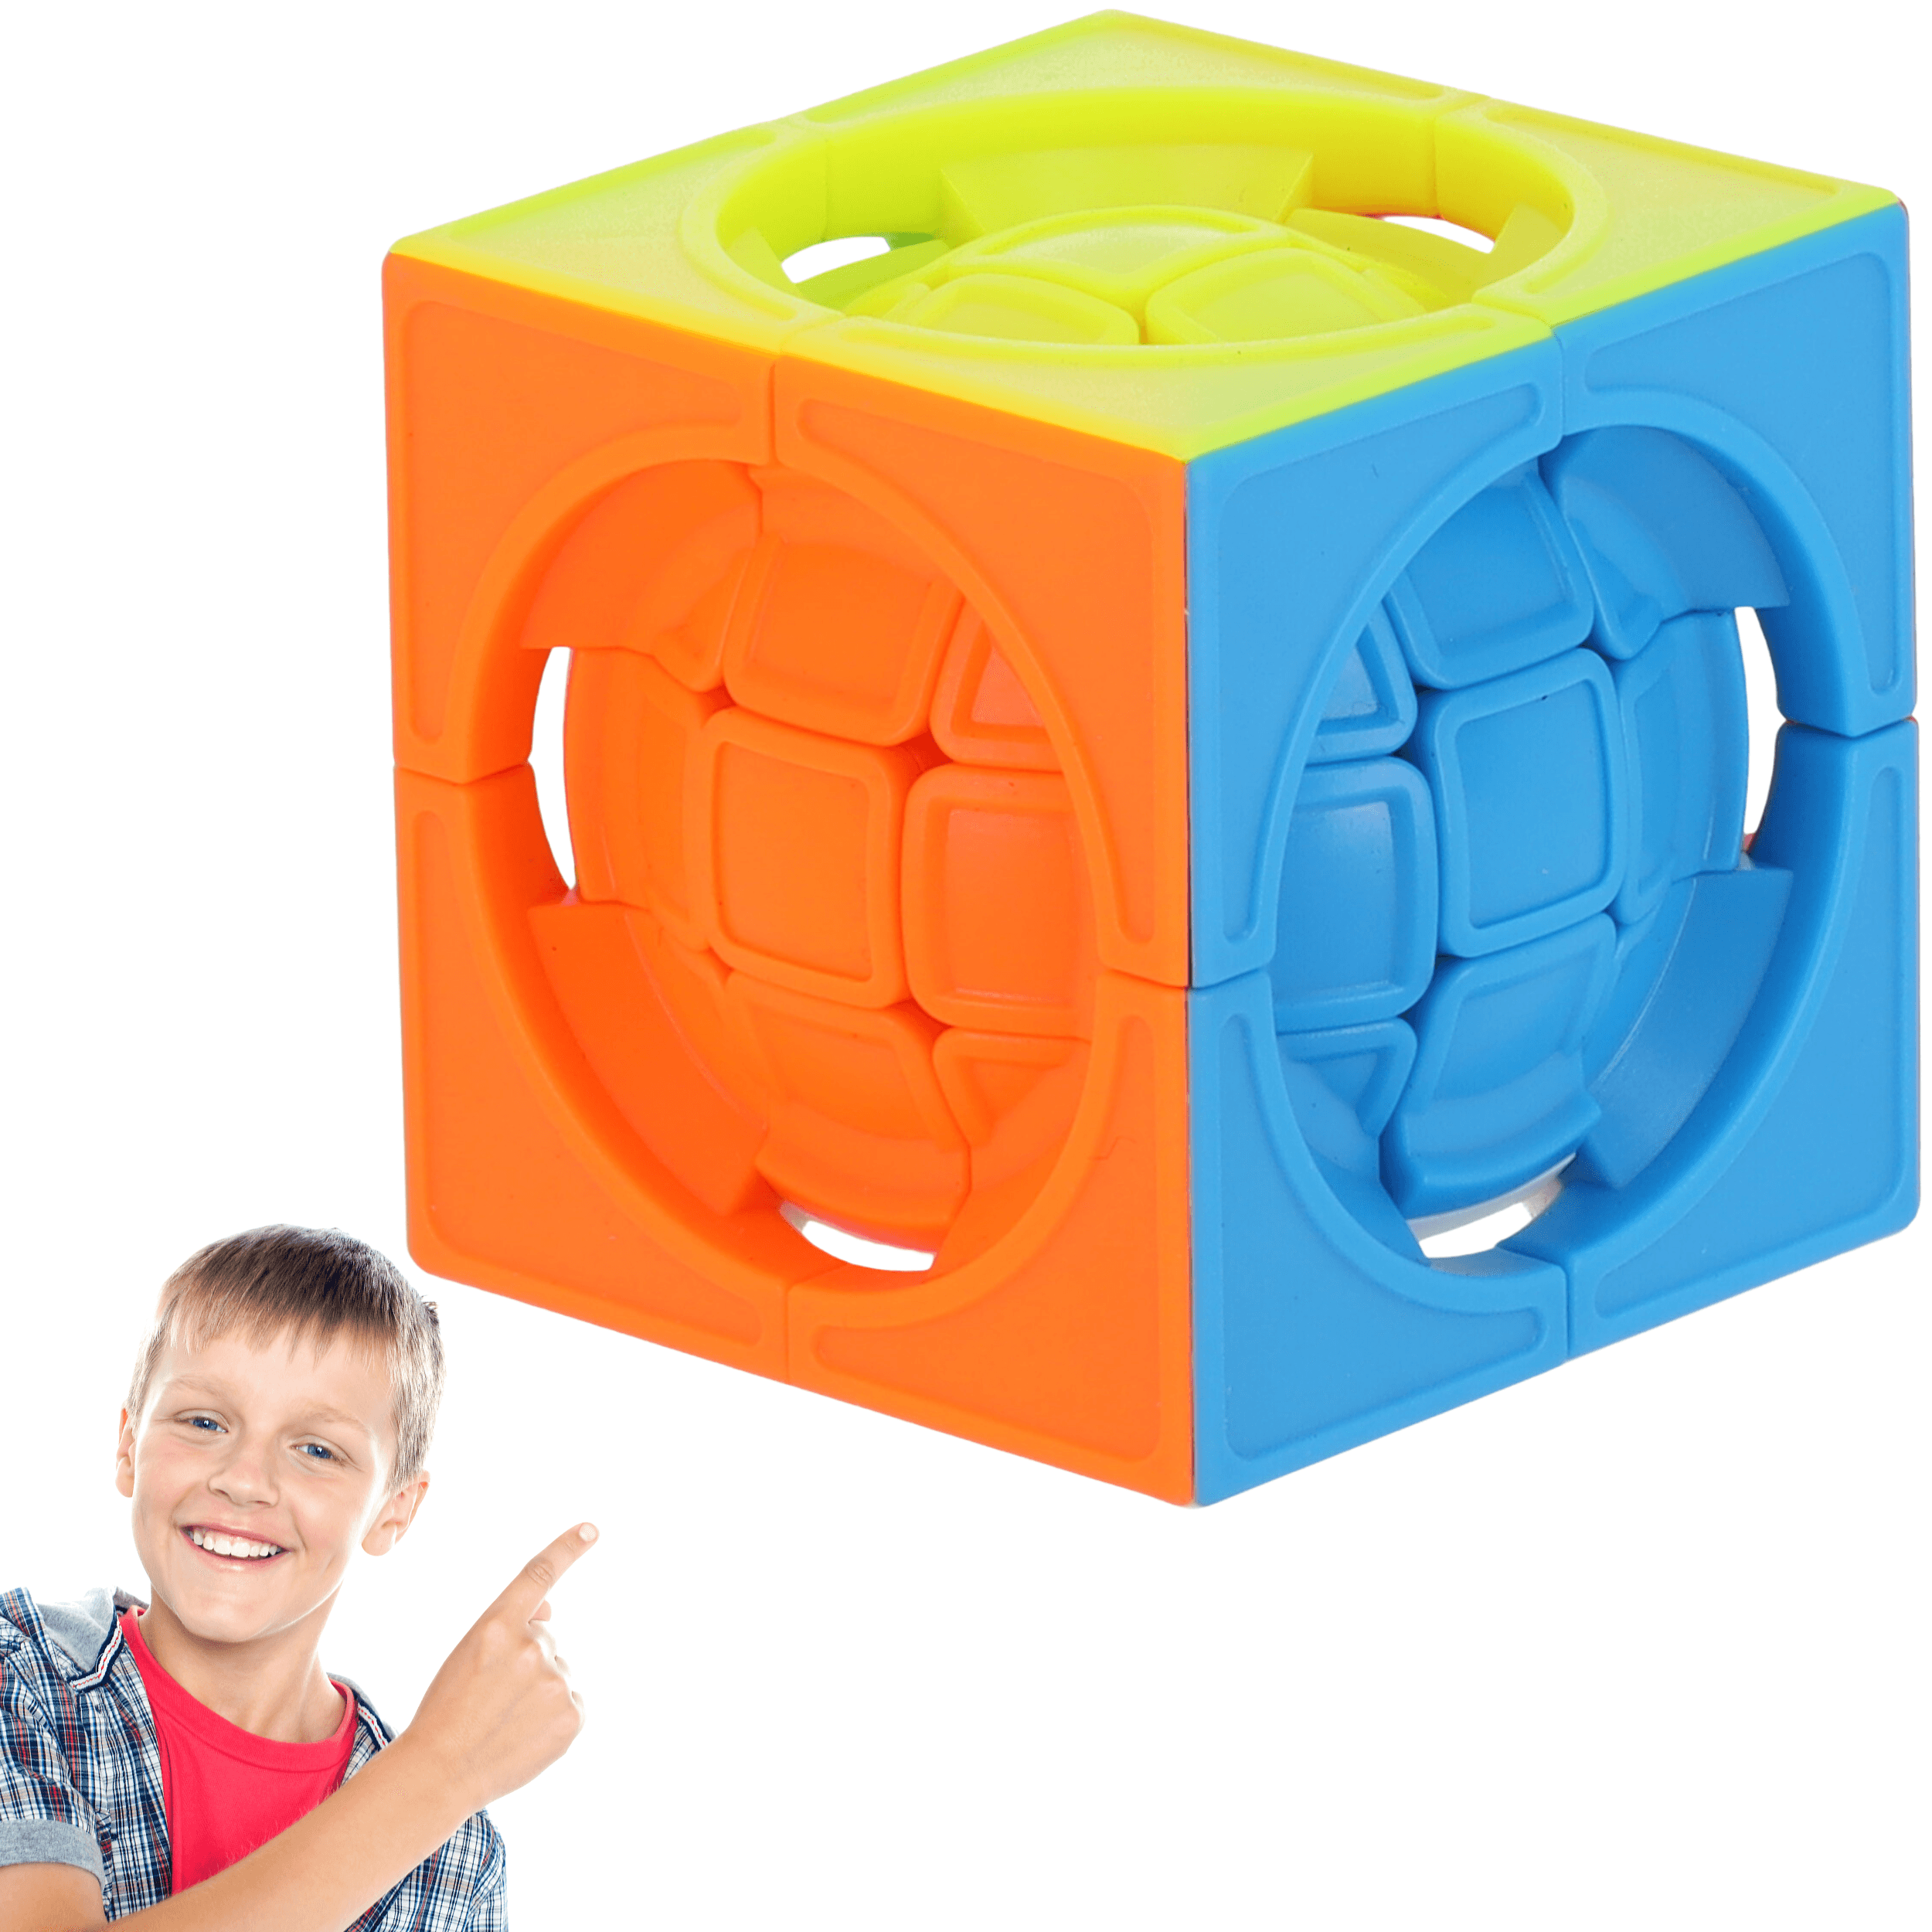 Modern jigsaw puzzle, Rubik's Cube